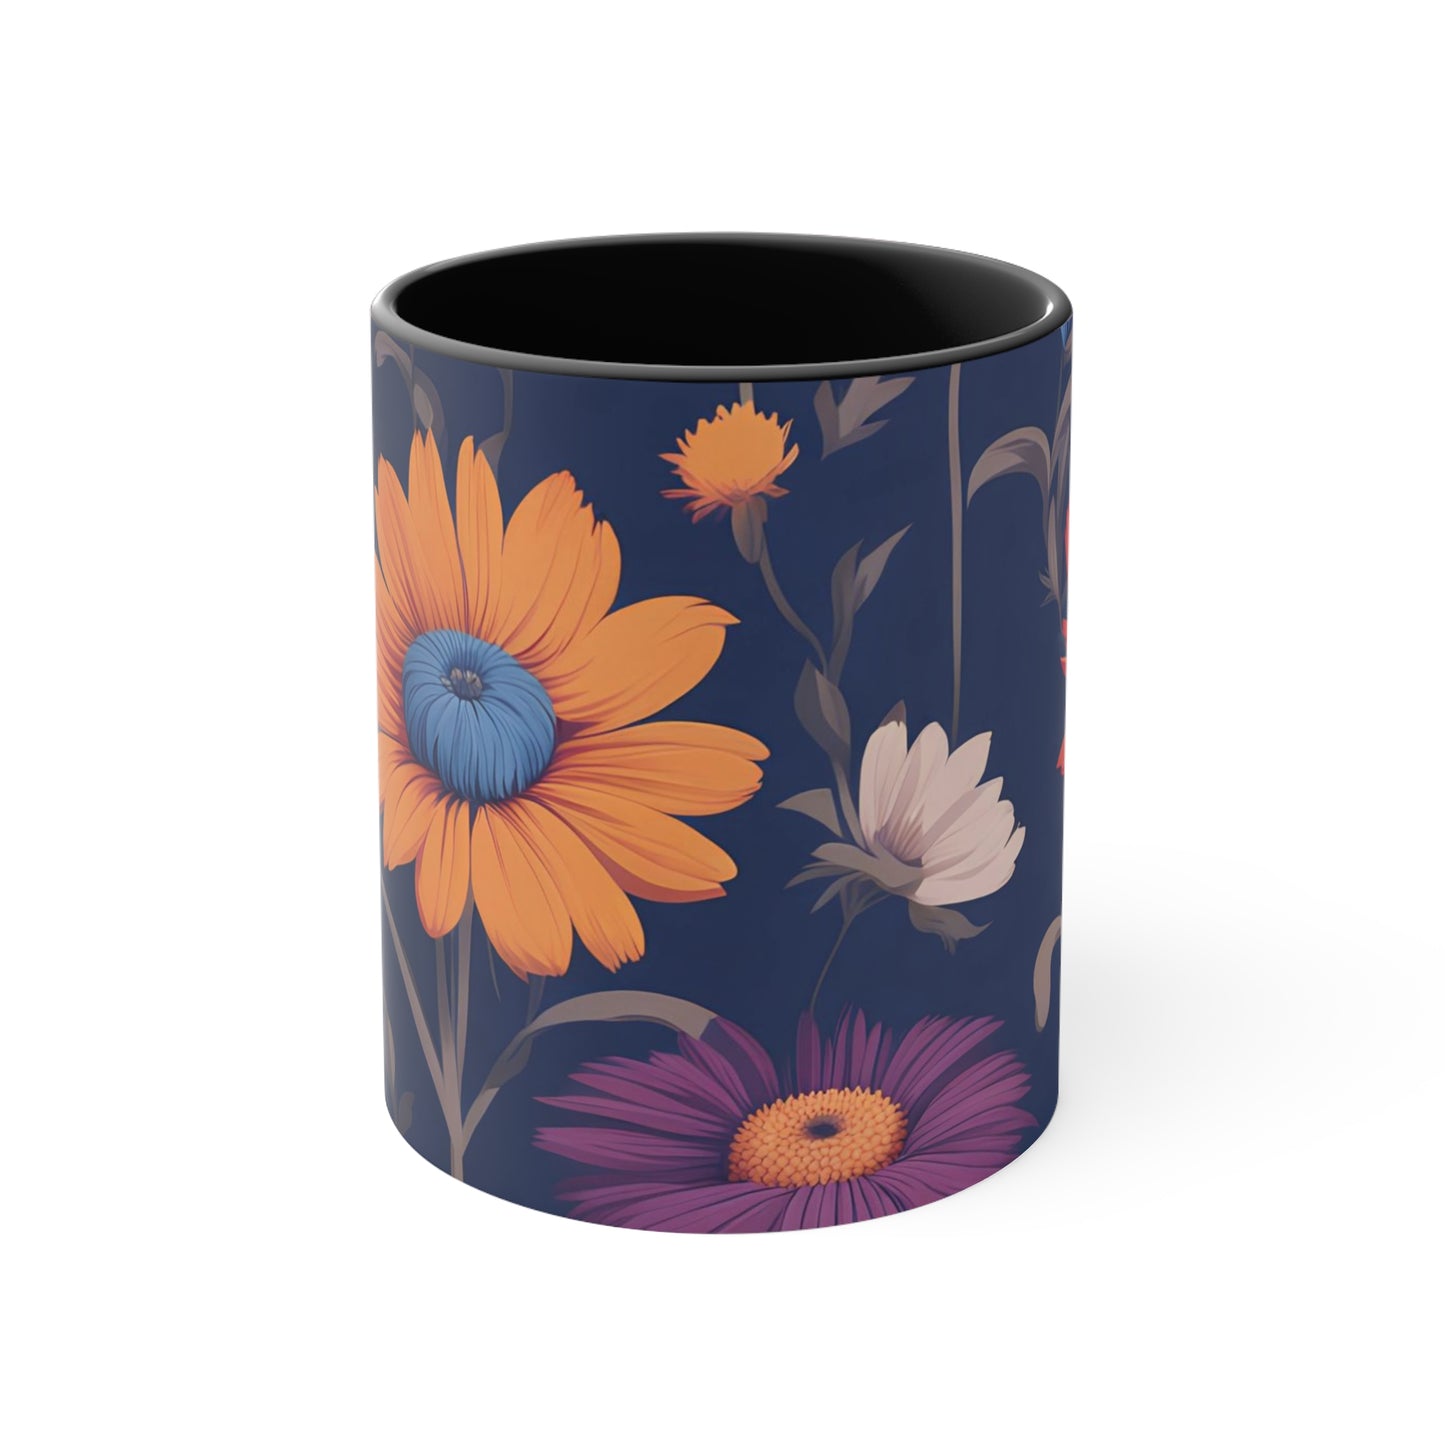 Fun Wildflowers, Ceramic Mug - Perfect for Coffee, Tea, and More!